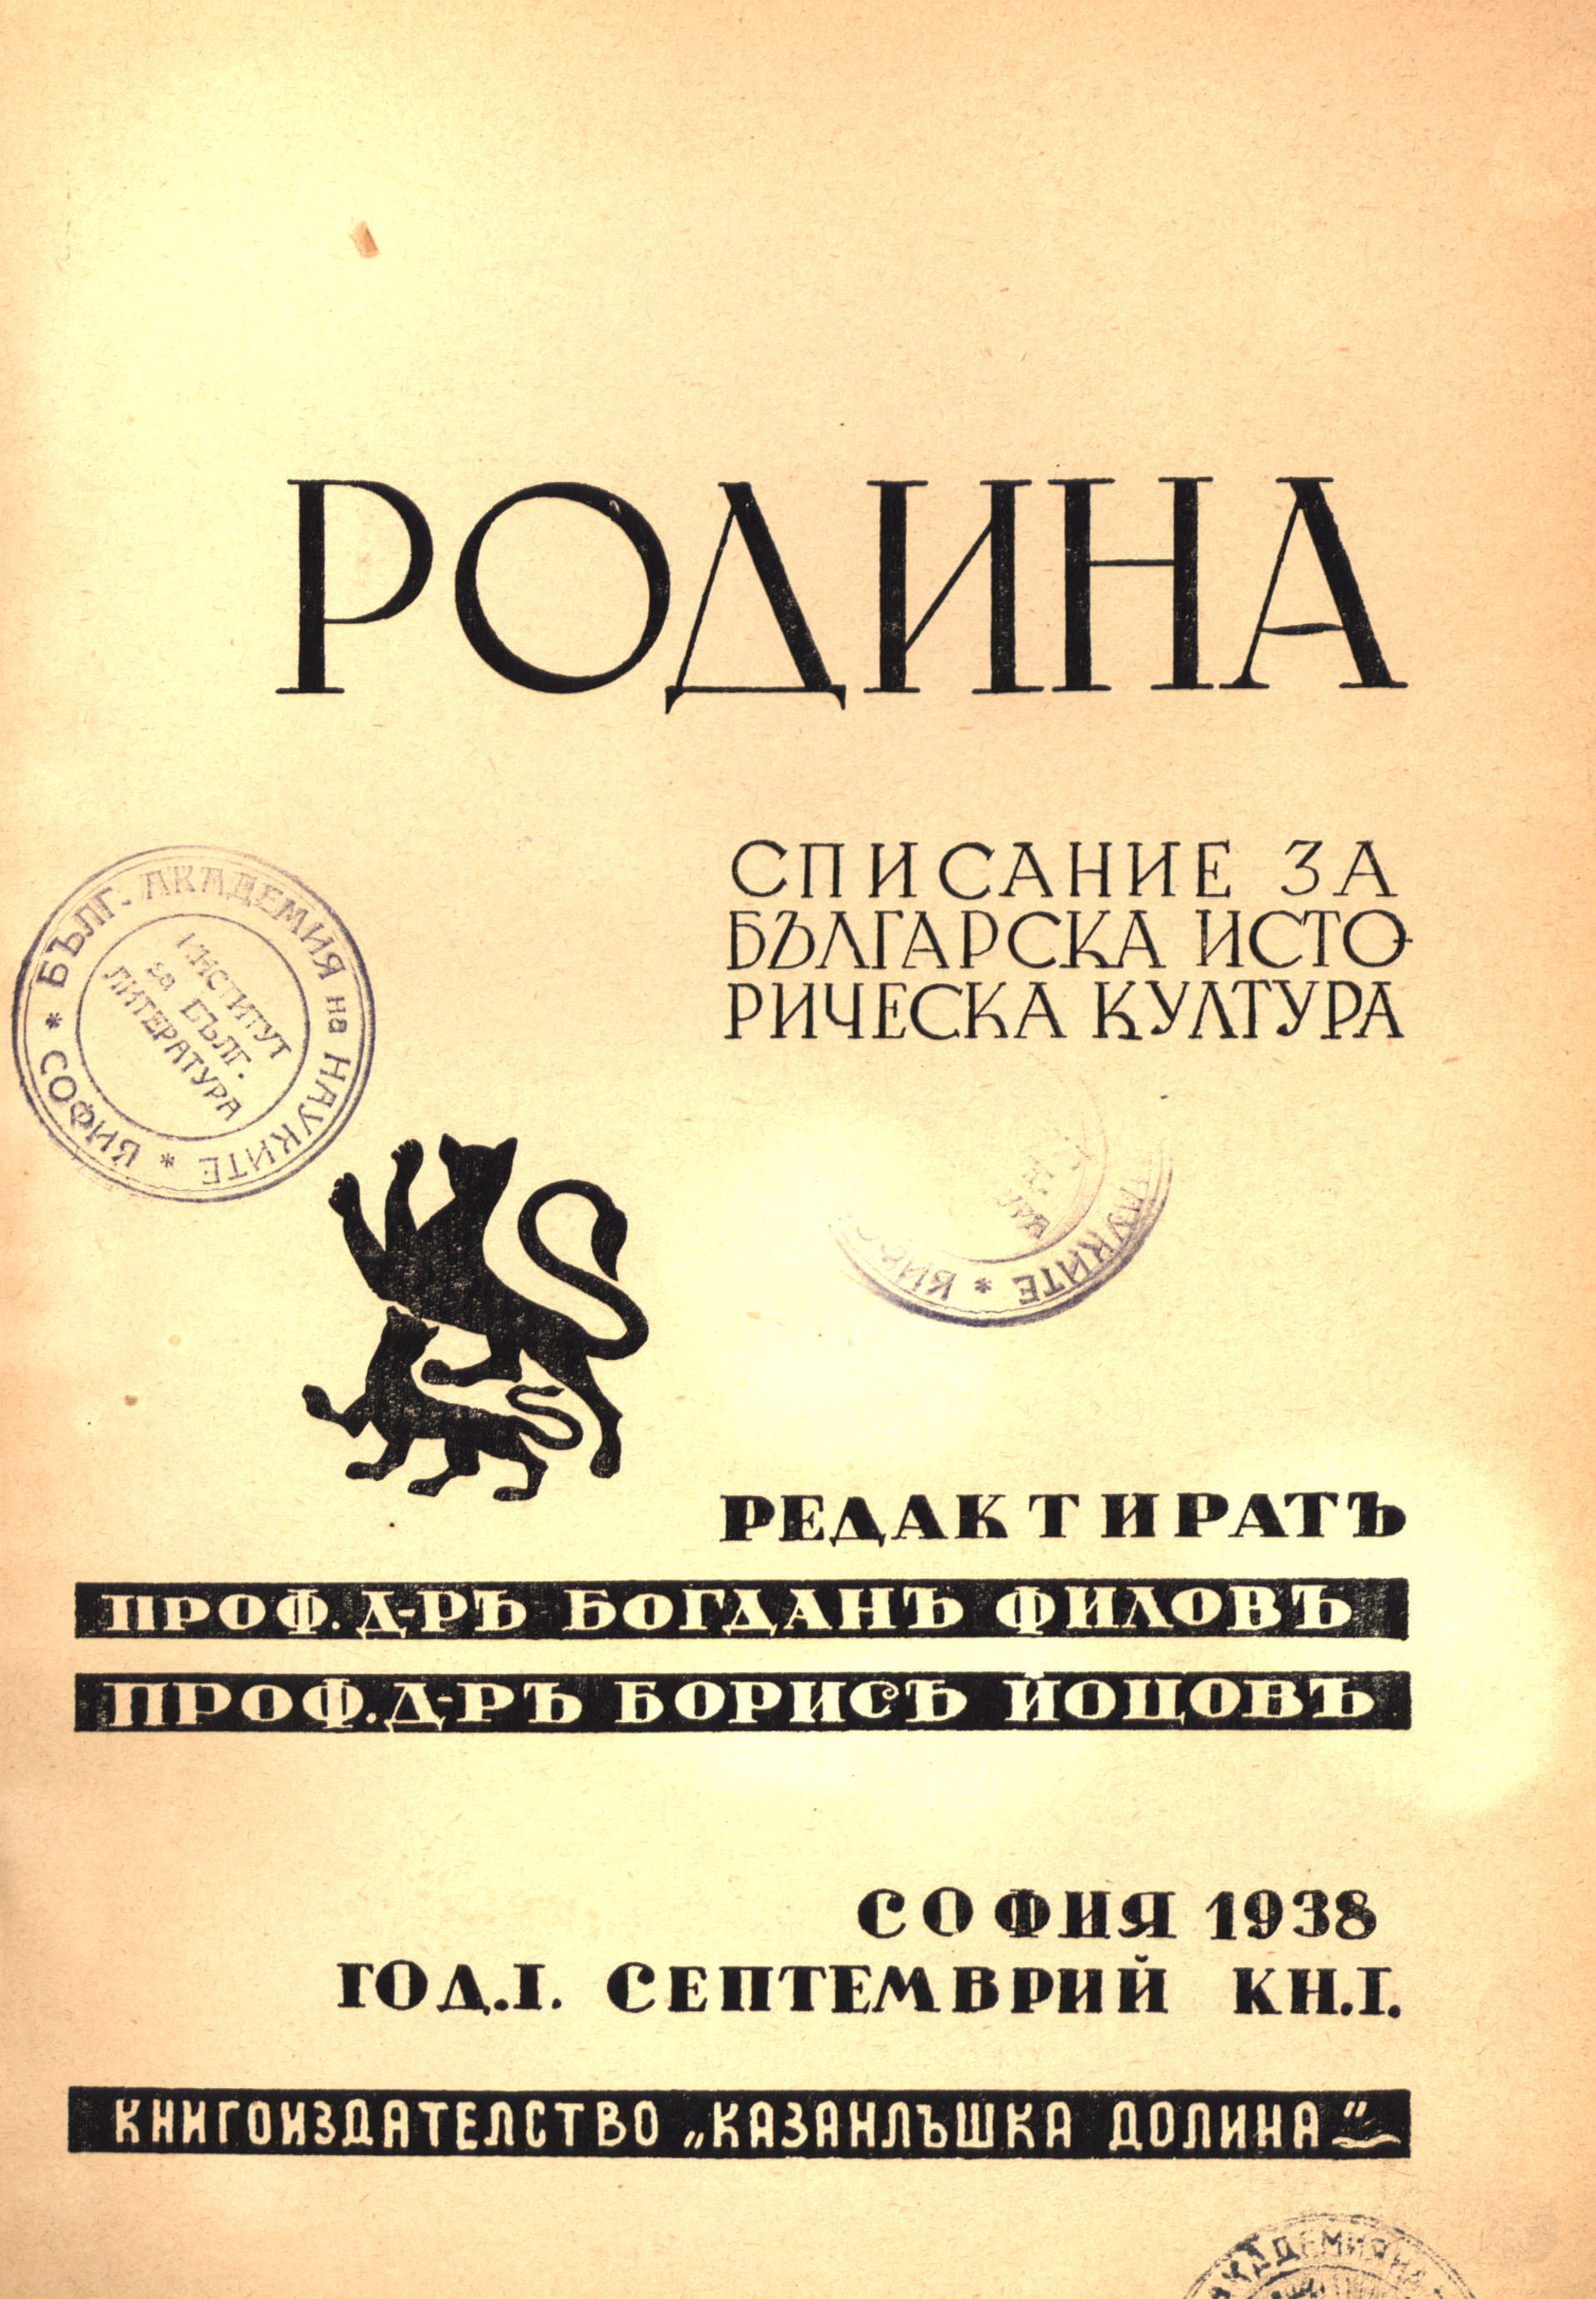 Списание "РОДИНА", 1938 книжка 1